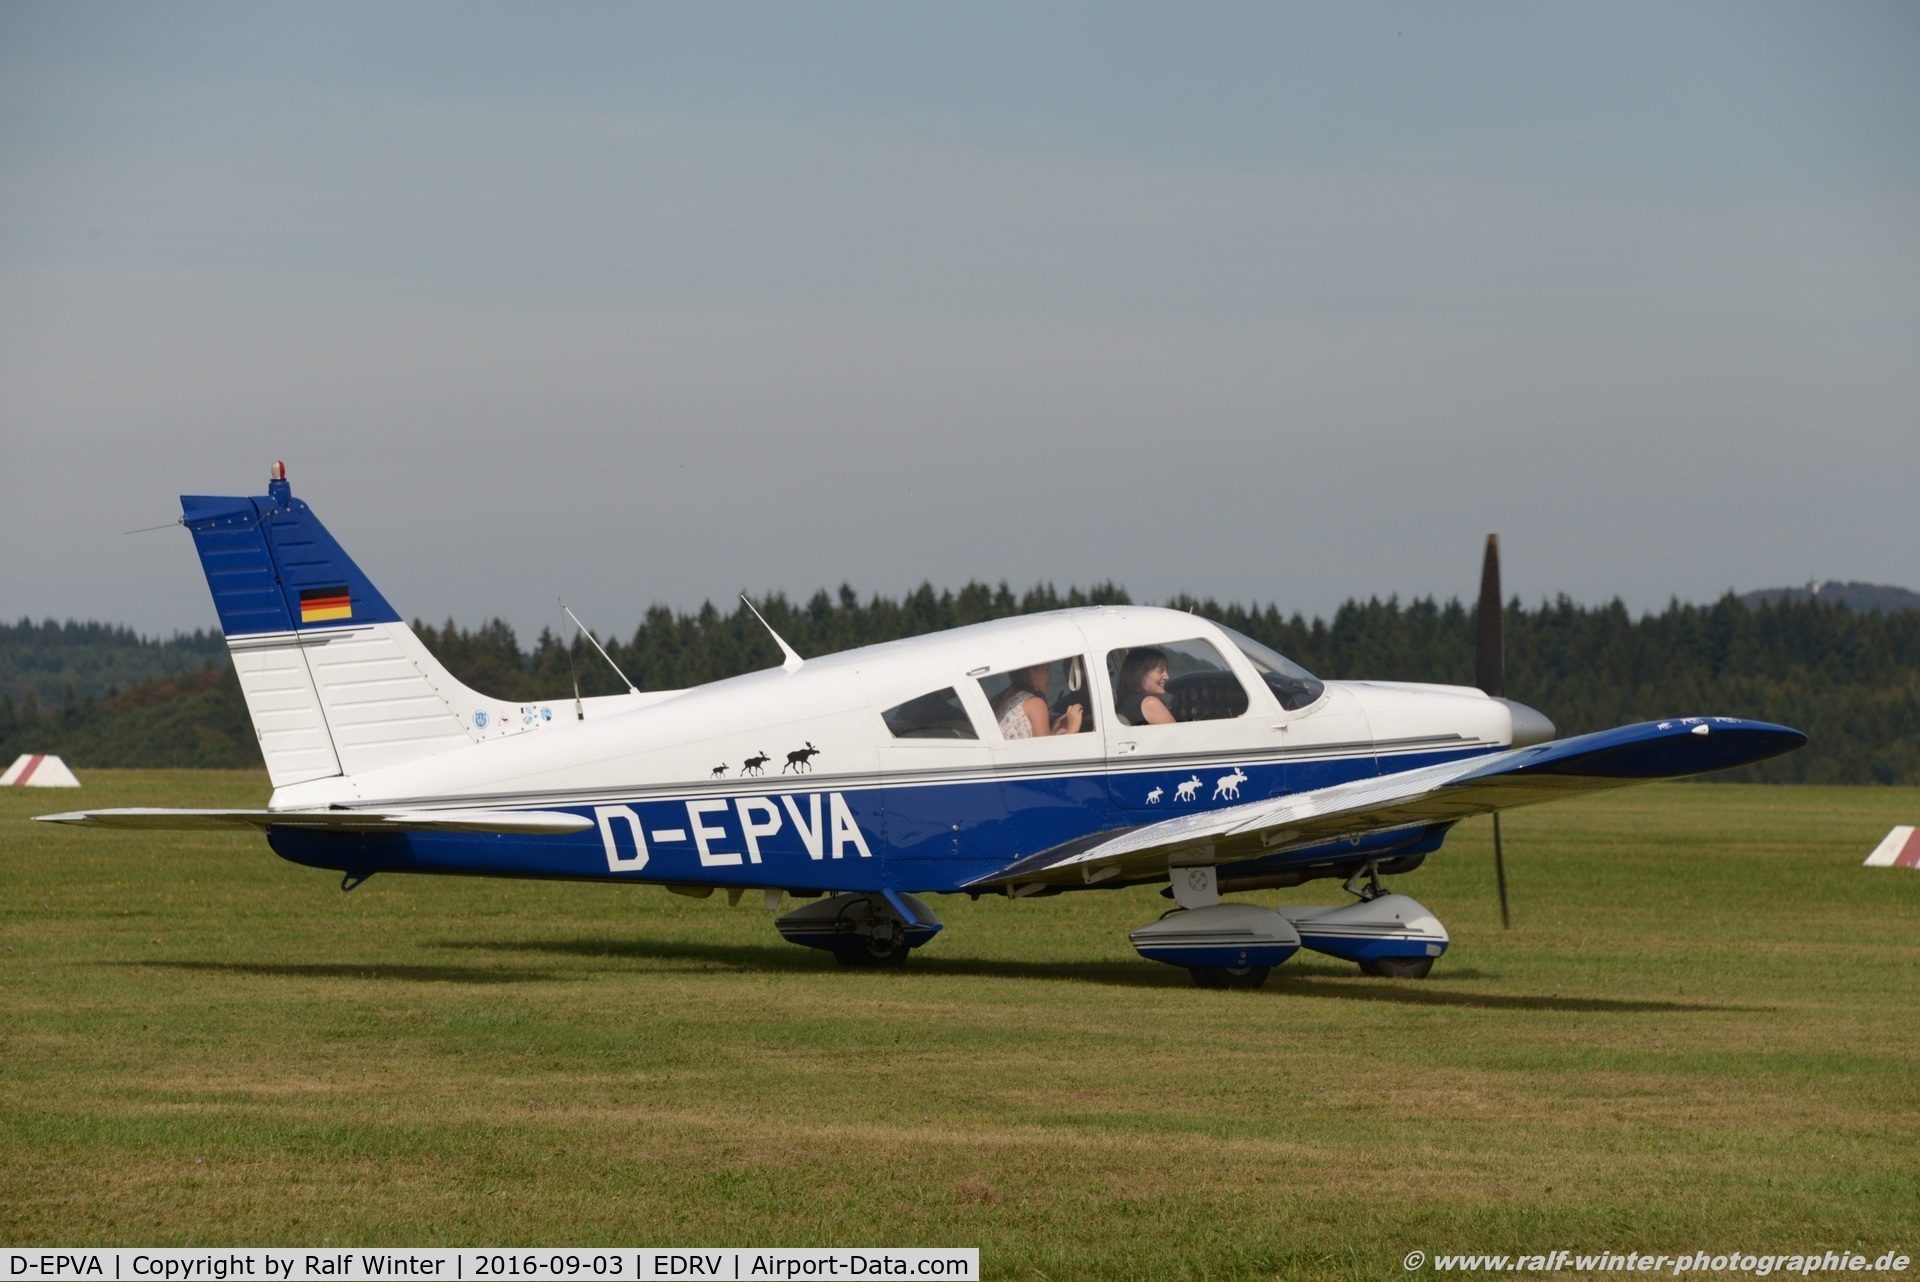 D-EPVA, 1973 Piper PA-28-180 Cherokee C/N 28-7305352, Piper PA-28-180 Cherokee - Private - 28-7305352 -  D-EPVA - 03.09.2016 - EDRV